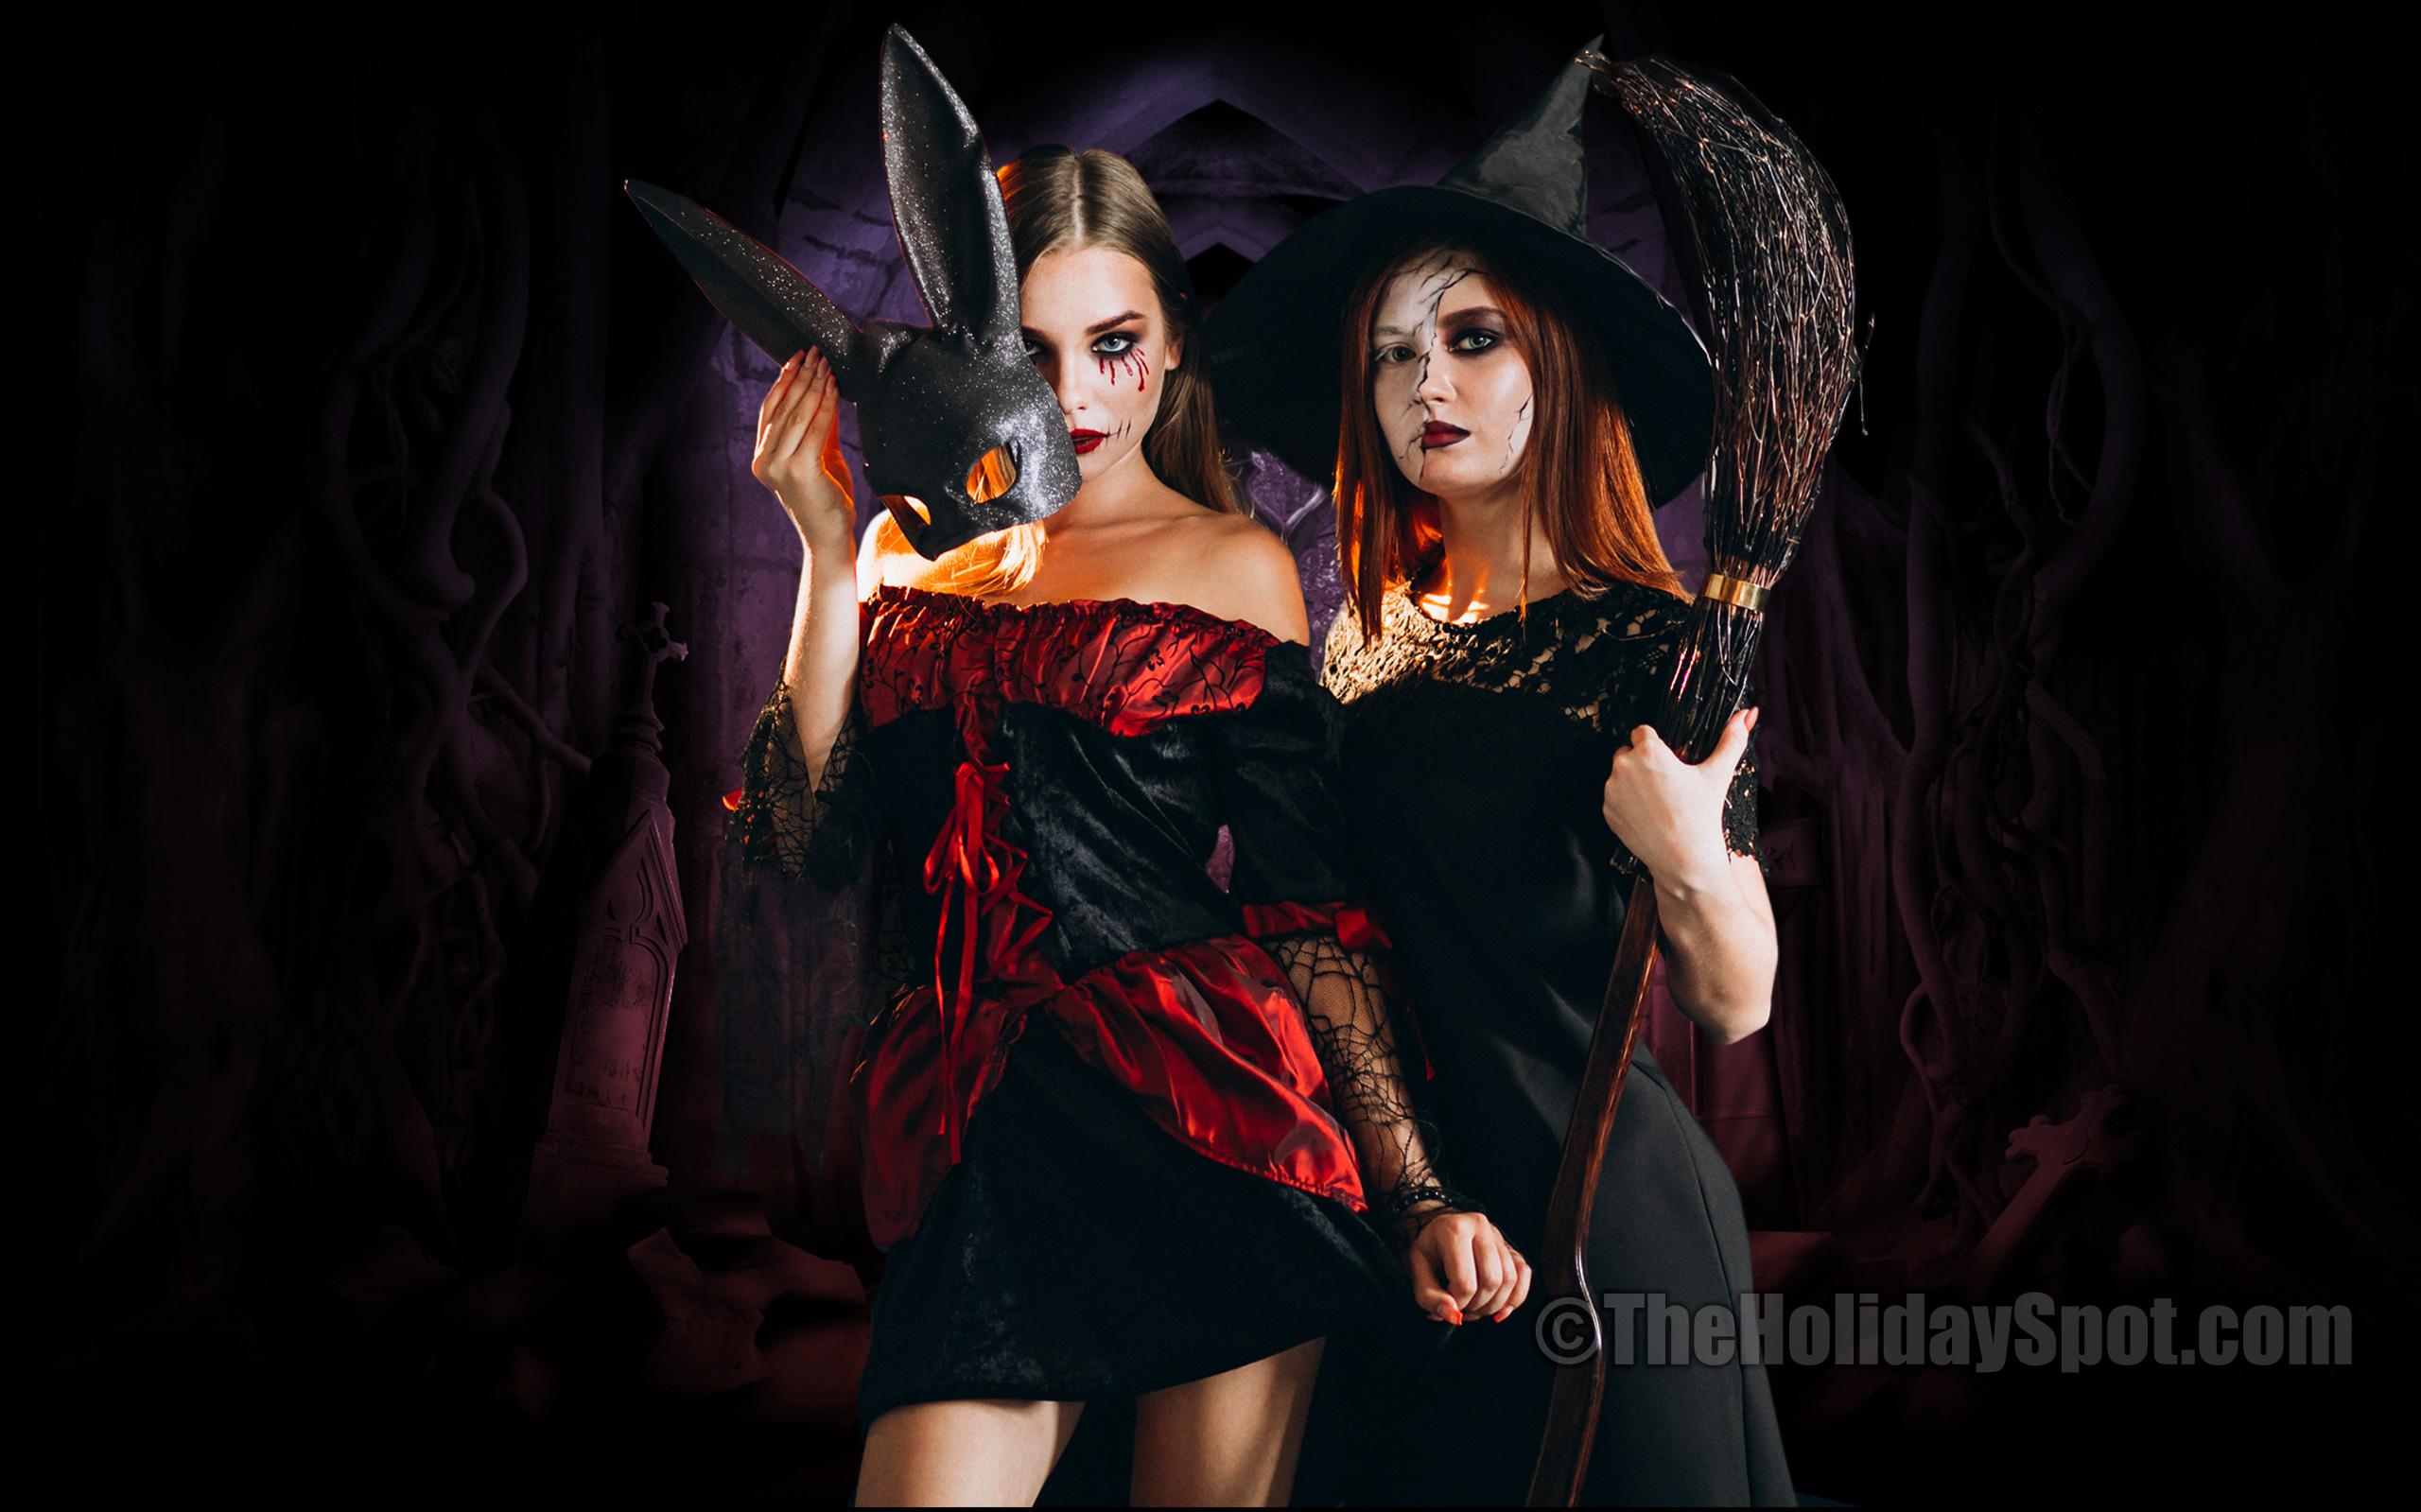 Halloween HD Wallpaper Image Background